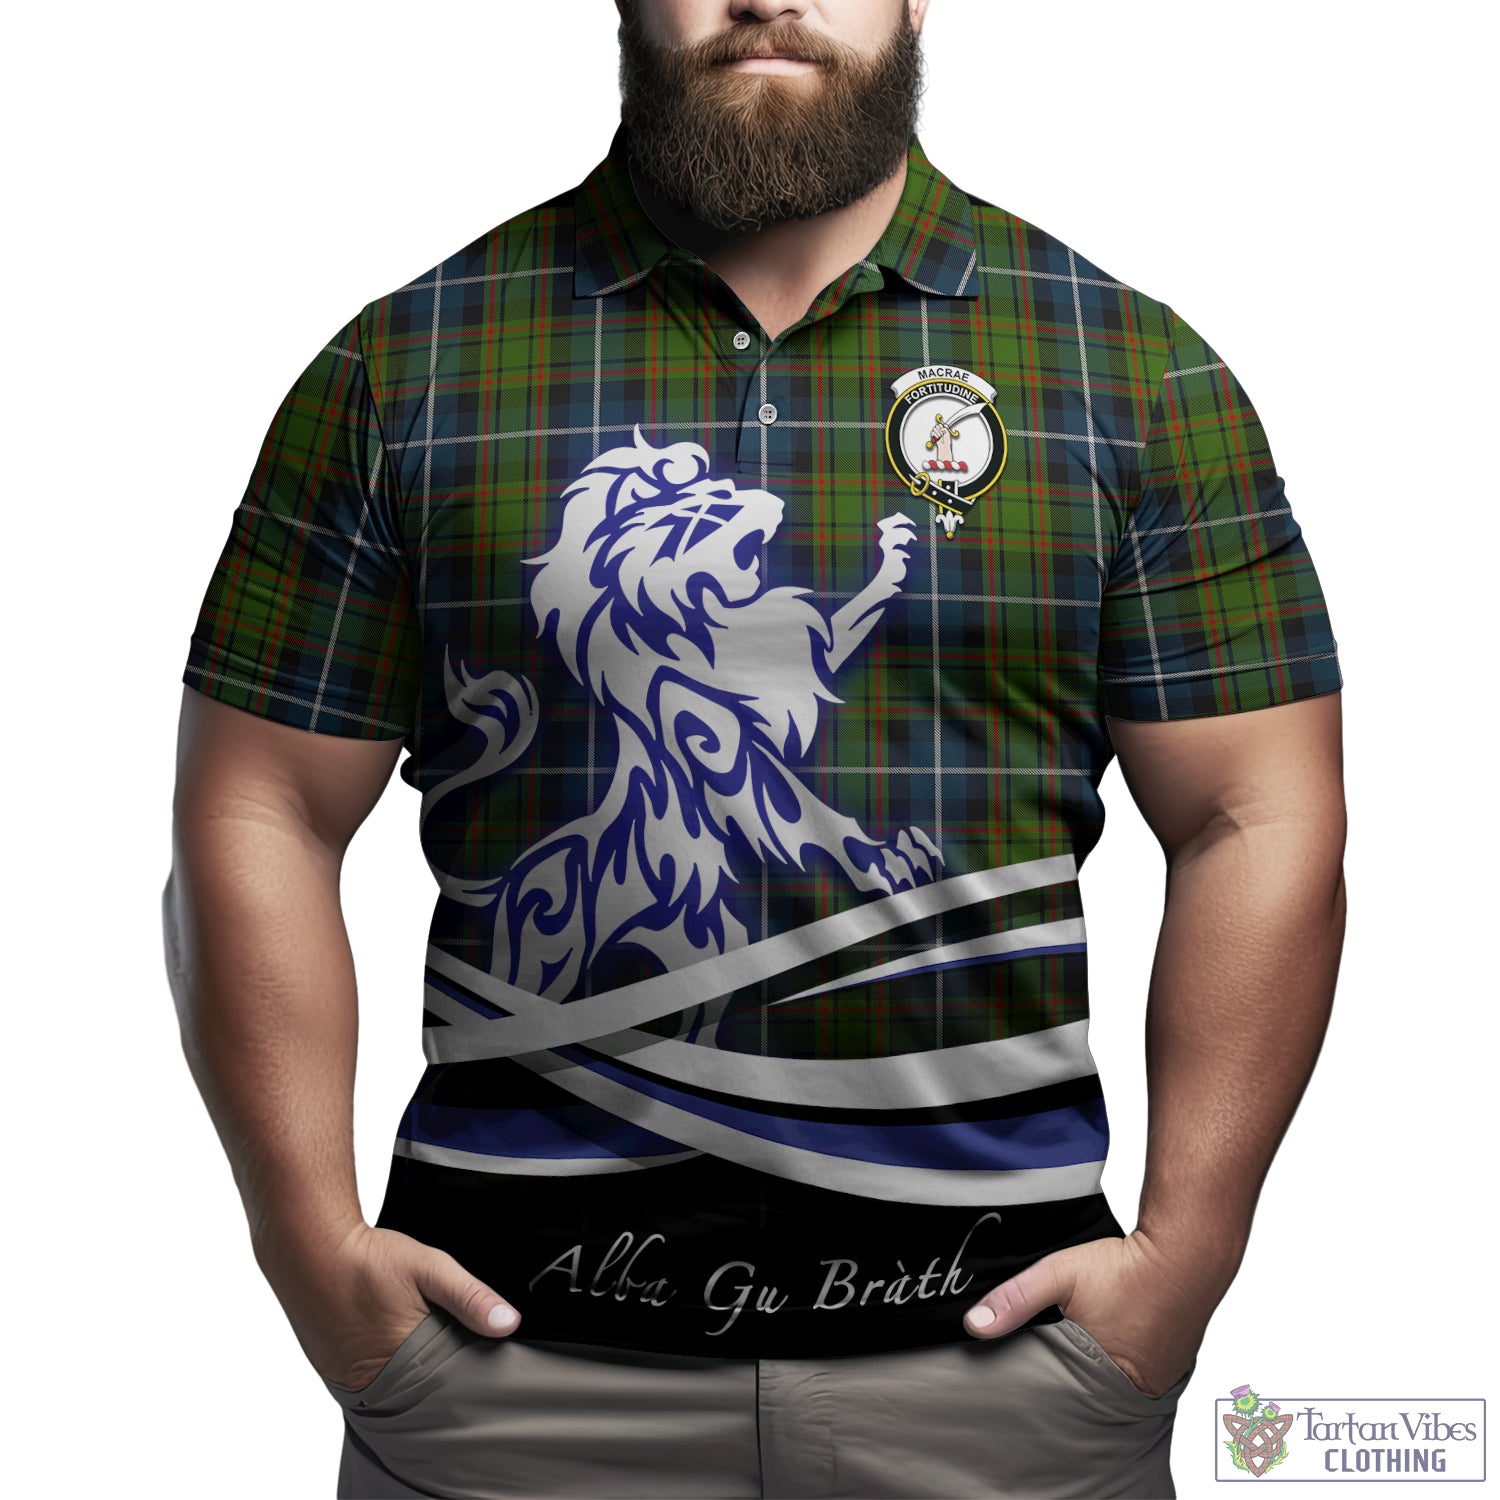 macrae-hunting-tartan-polo-shirt-with-alba-gu-brath-regal-lion-emblem